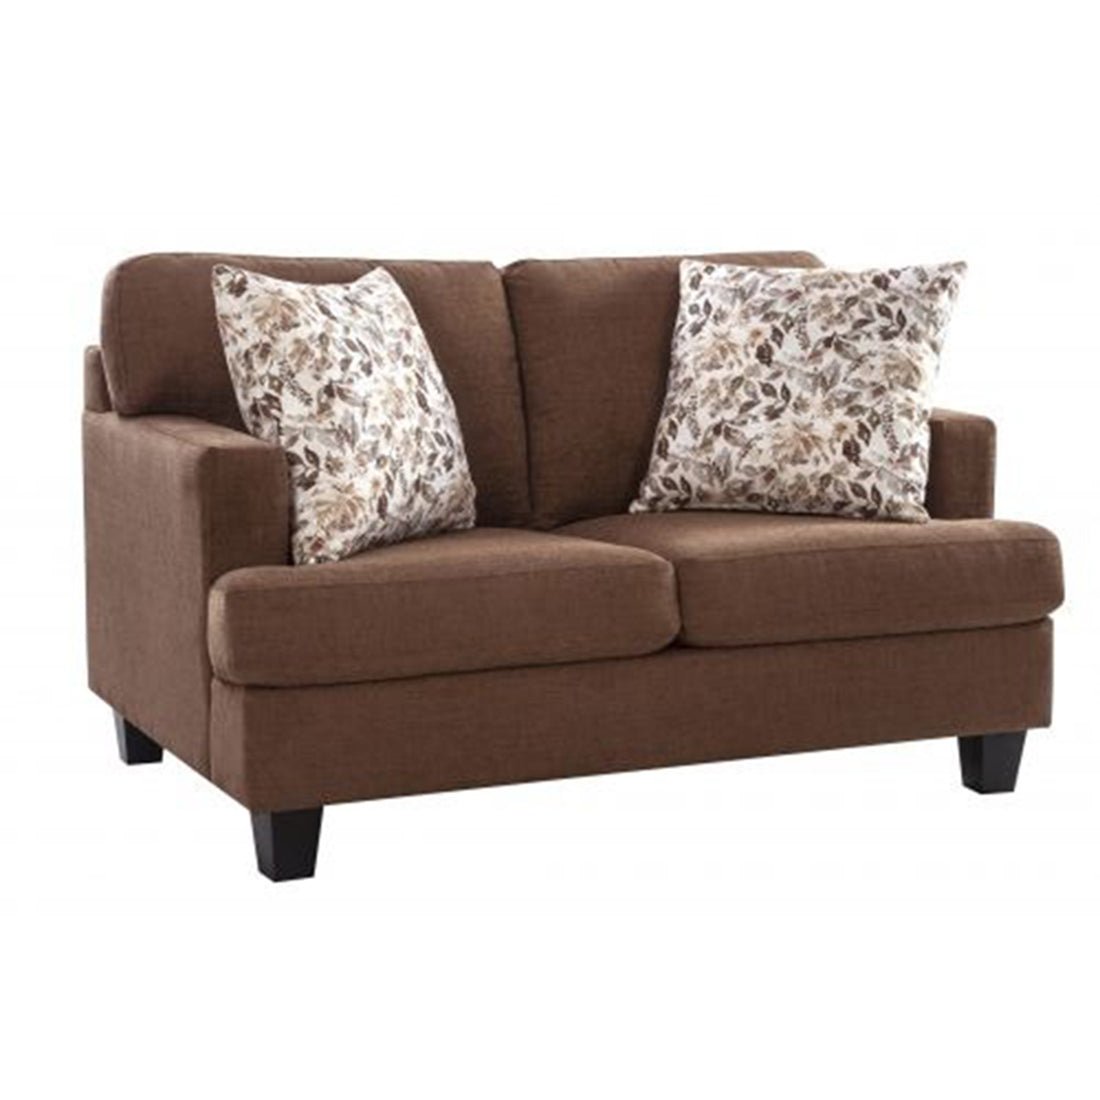 Torque India Apricot 2 Seater Fabric Sofa For Living Room - Brown | 2 Seater Fabric Sofa - Torque India